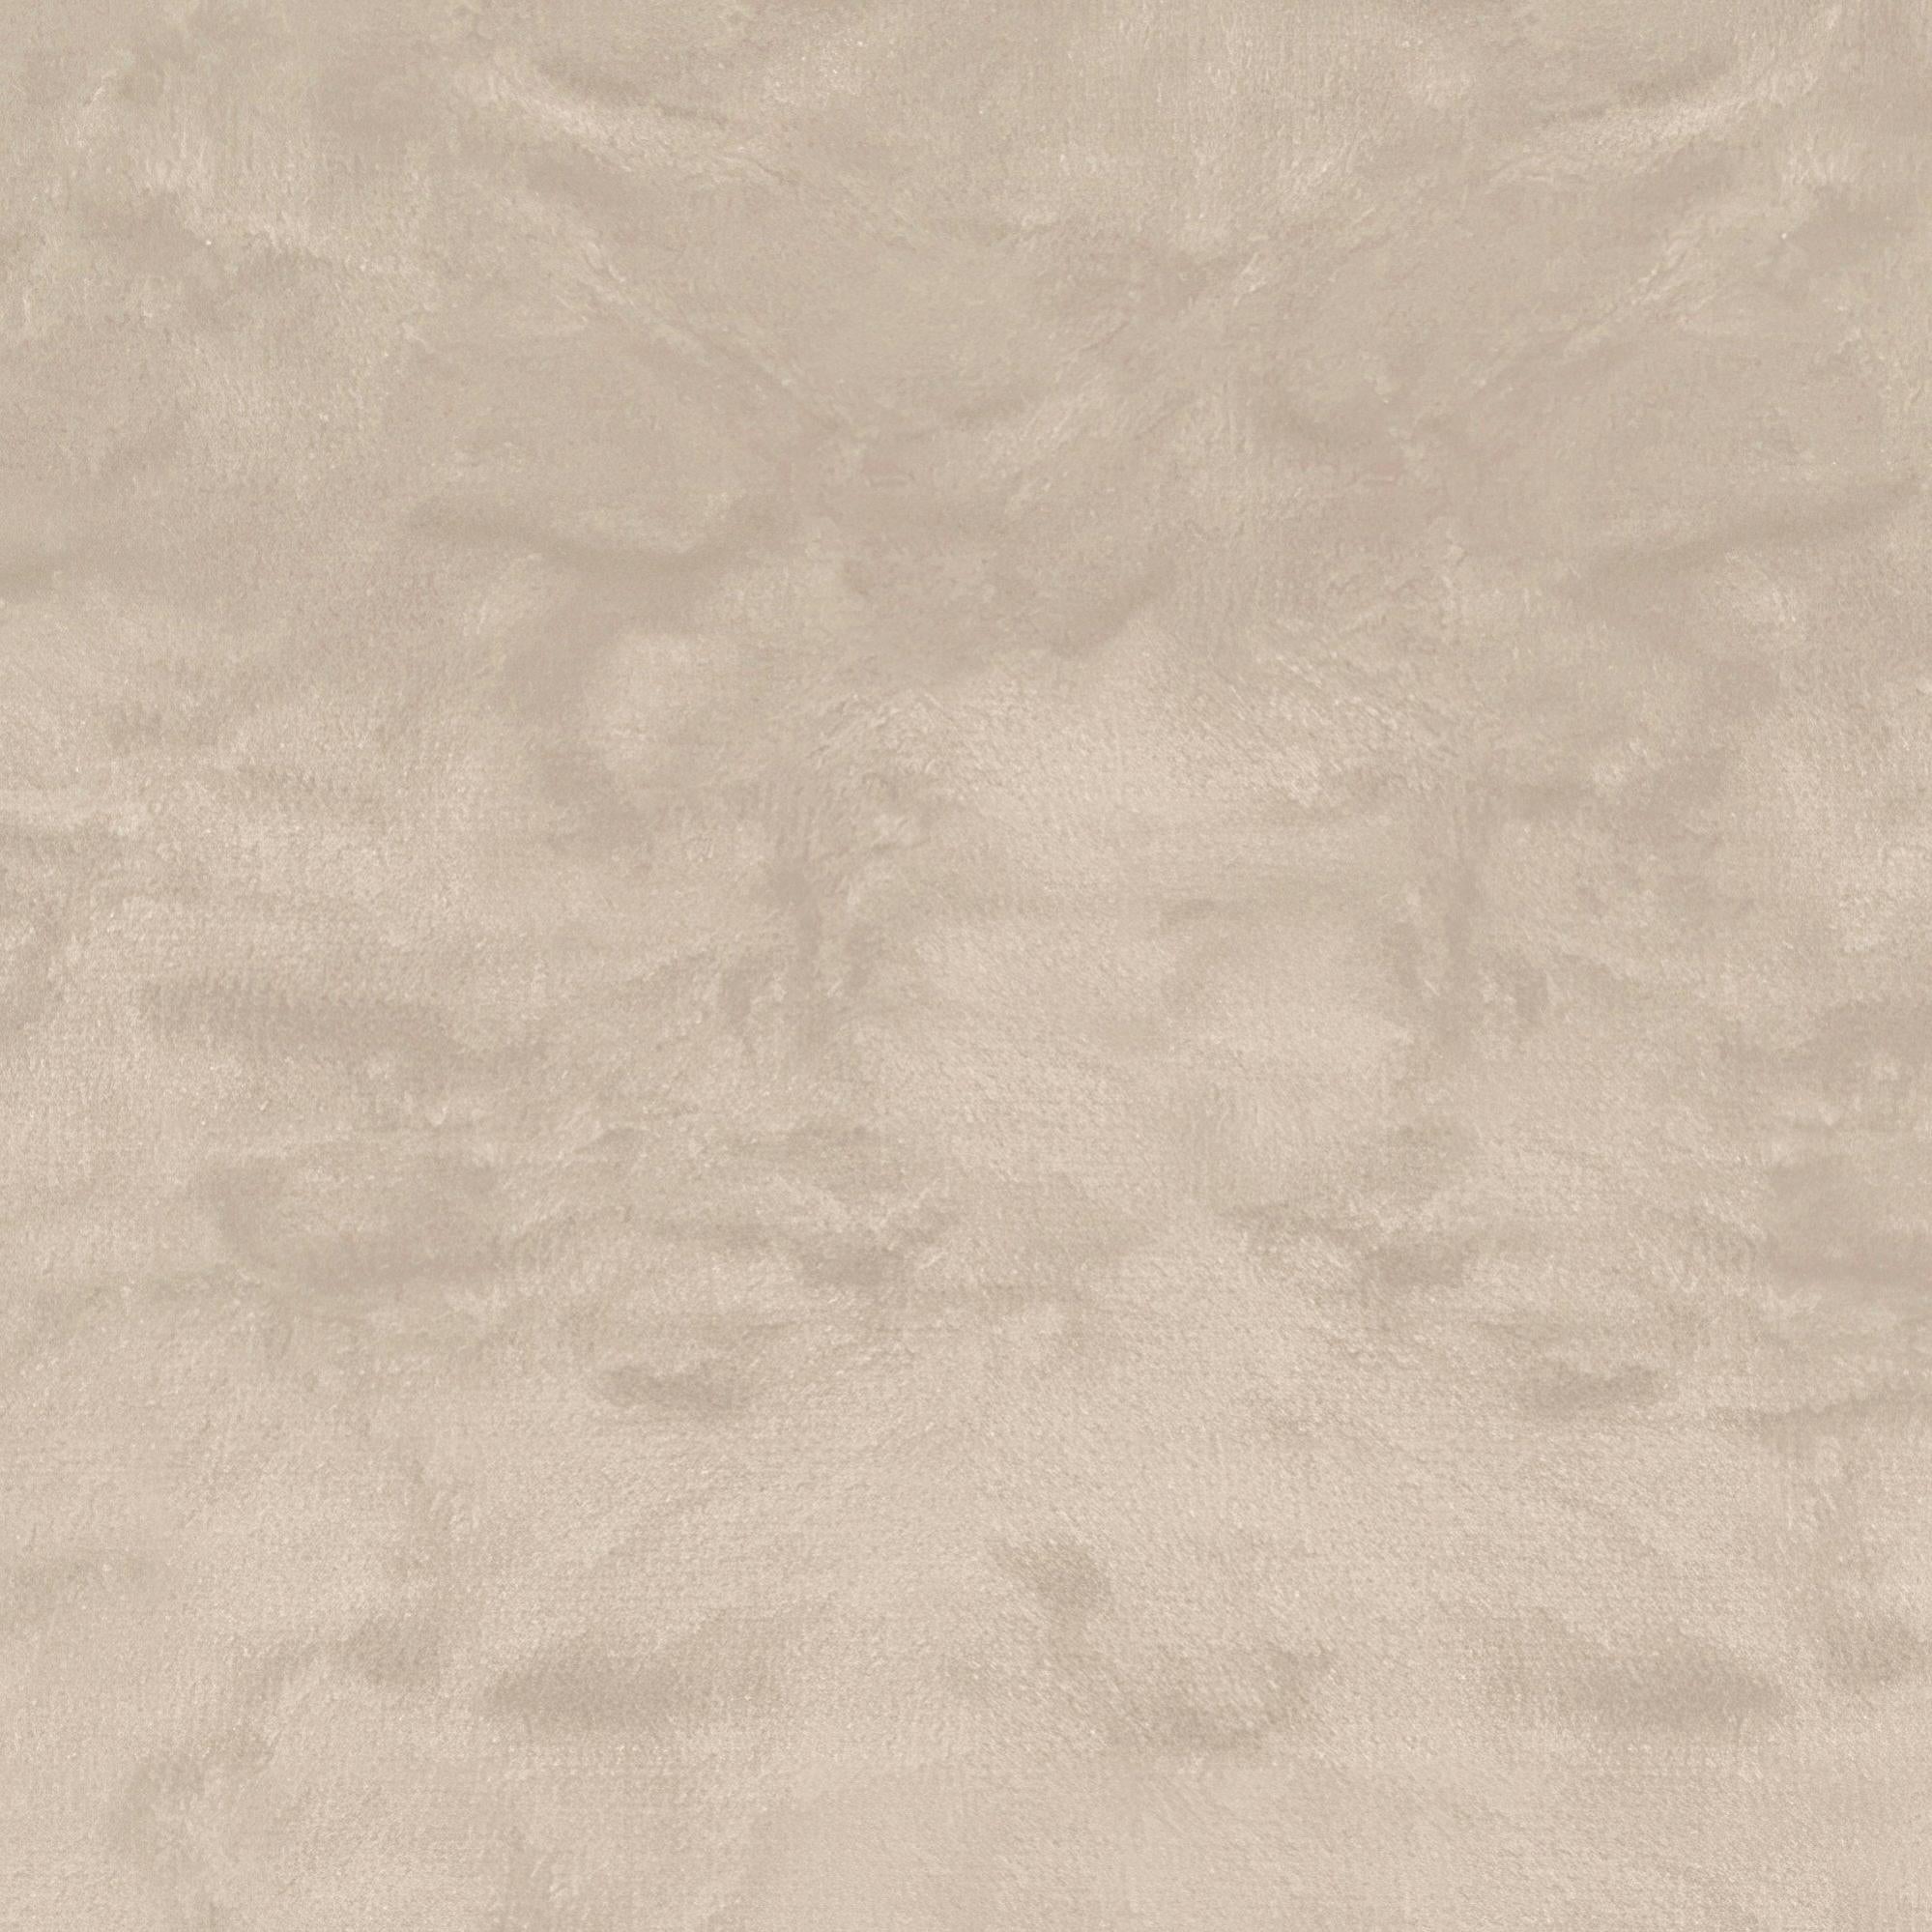 Tela al corte tapicería terciopelo wrinkle crudo ancho 140 cm